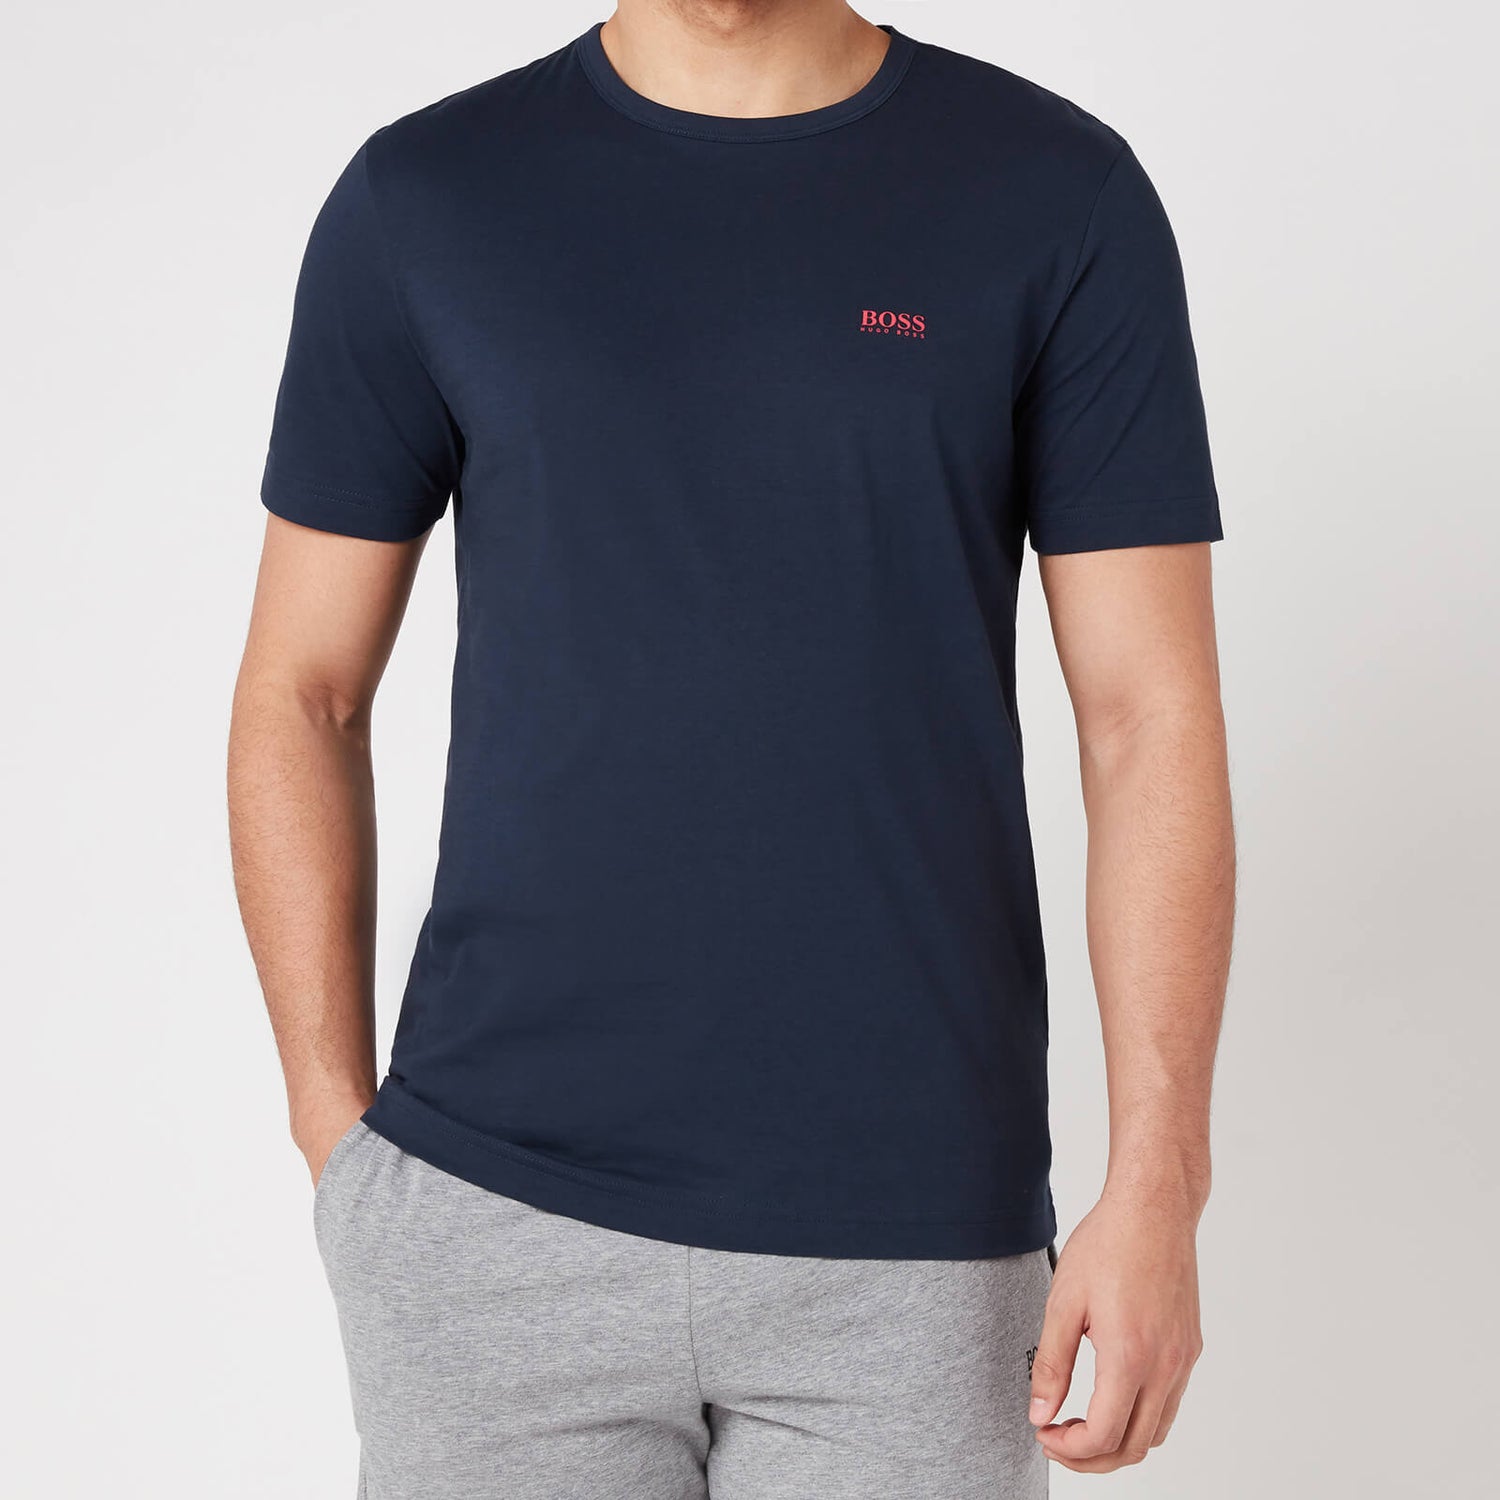 BOSS Athleisure Men's Tee 01 T-Shirt - Navy